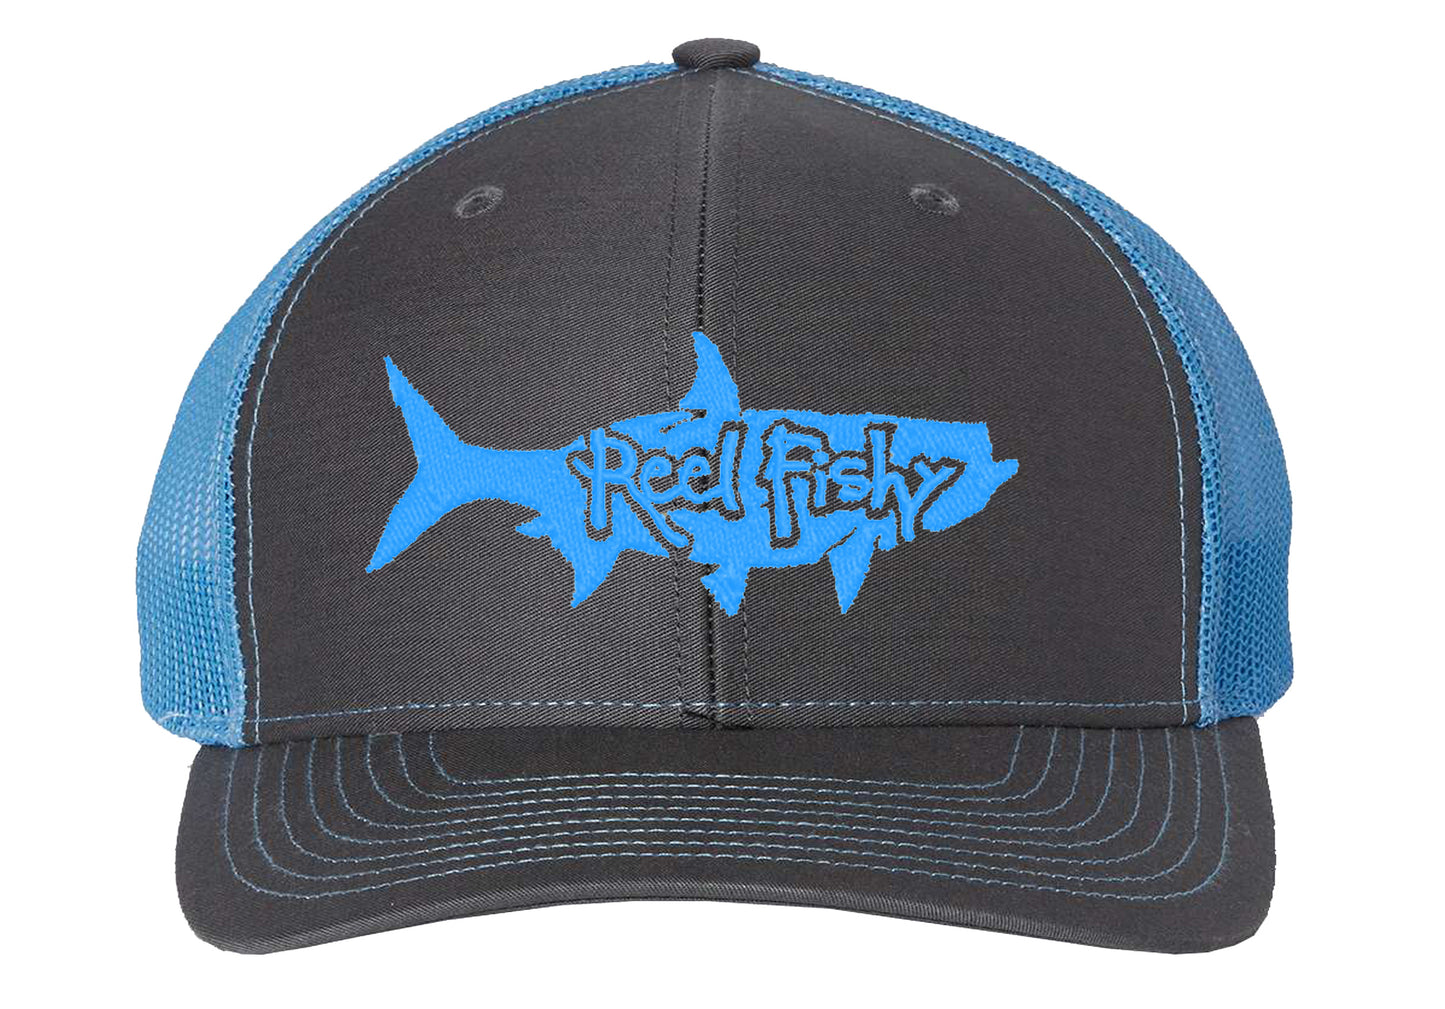 Charcoal/Blue Trucker hat with Blue Tarpon Logo